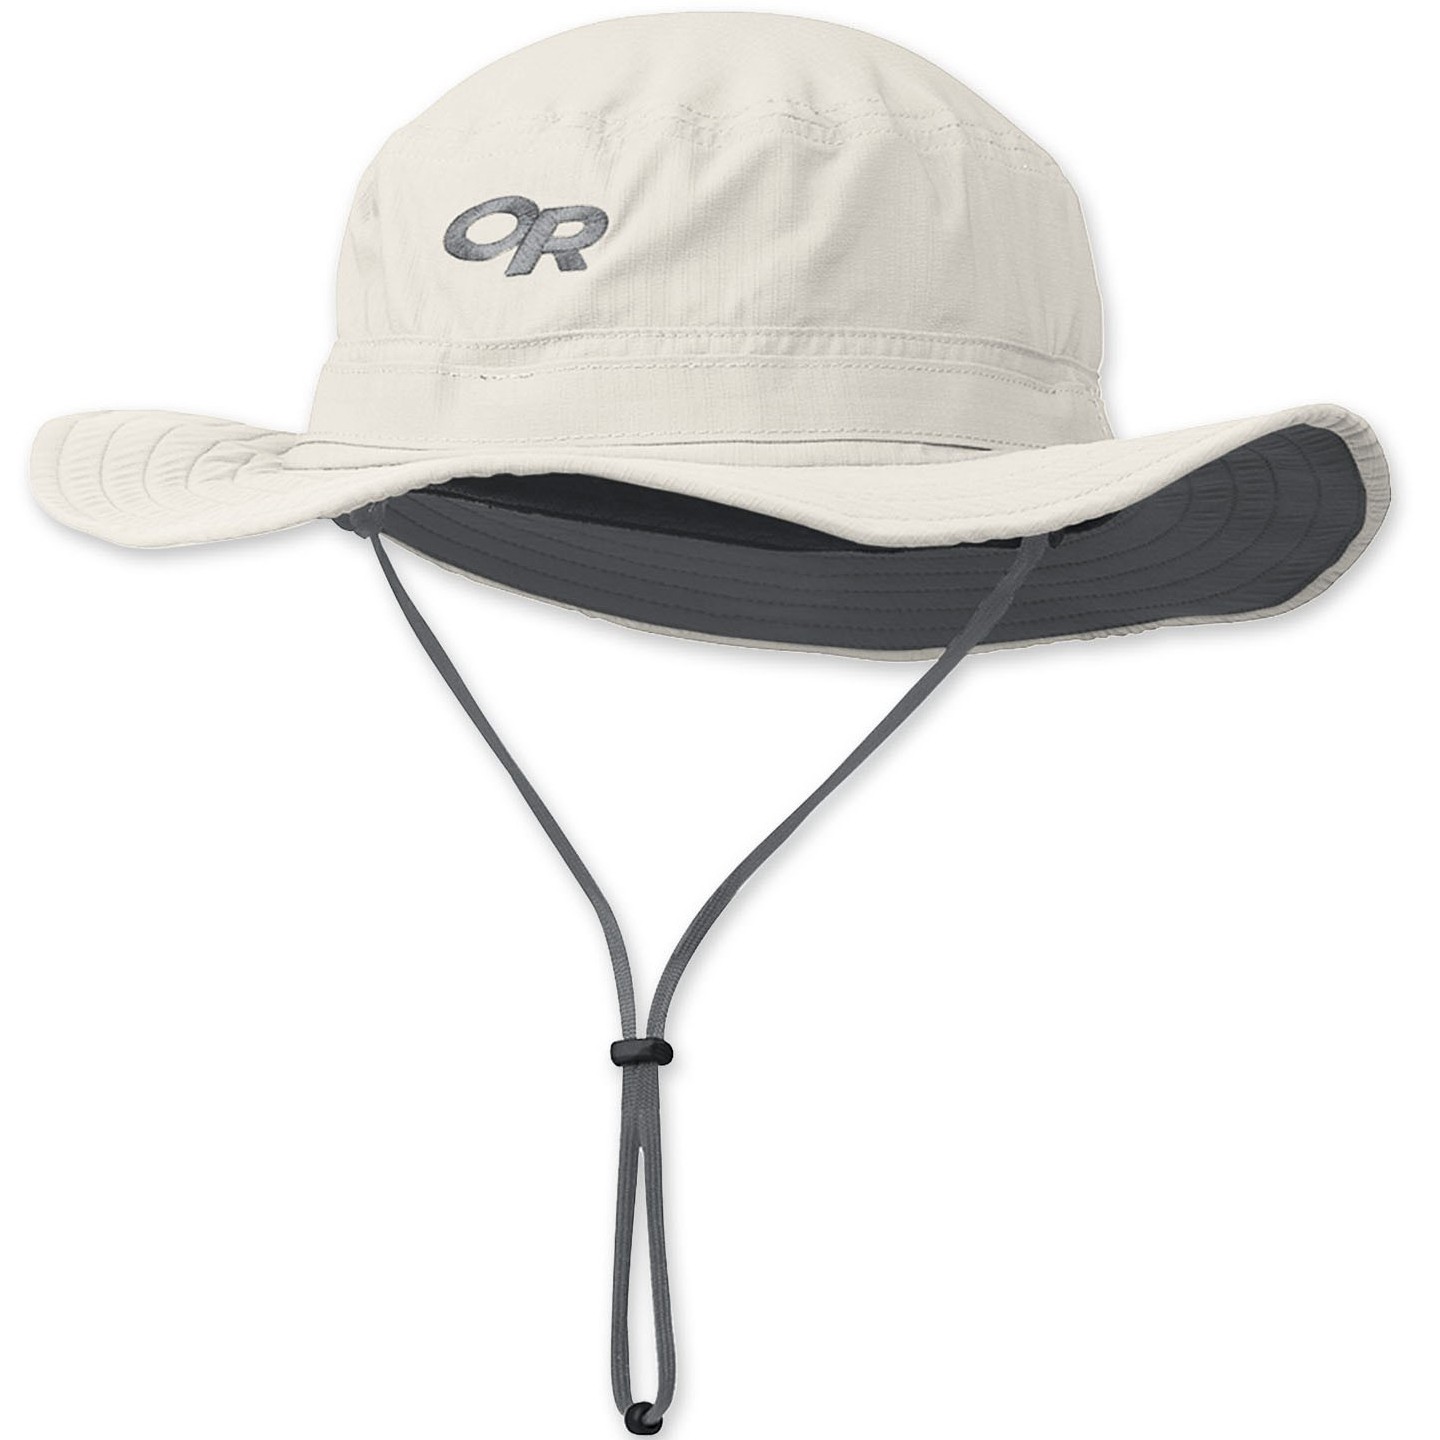 Outdoor research - Панама защитная Helios Sun Hat